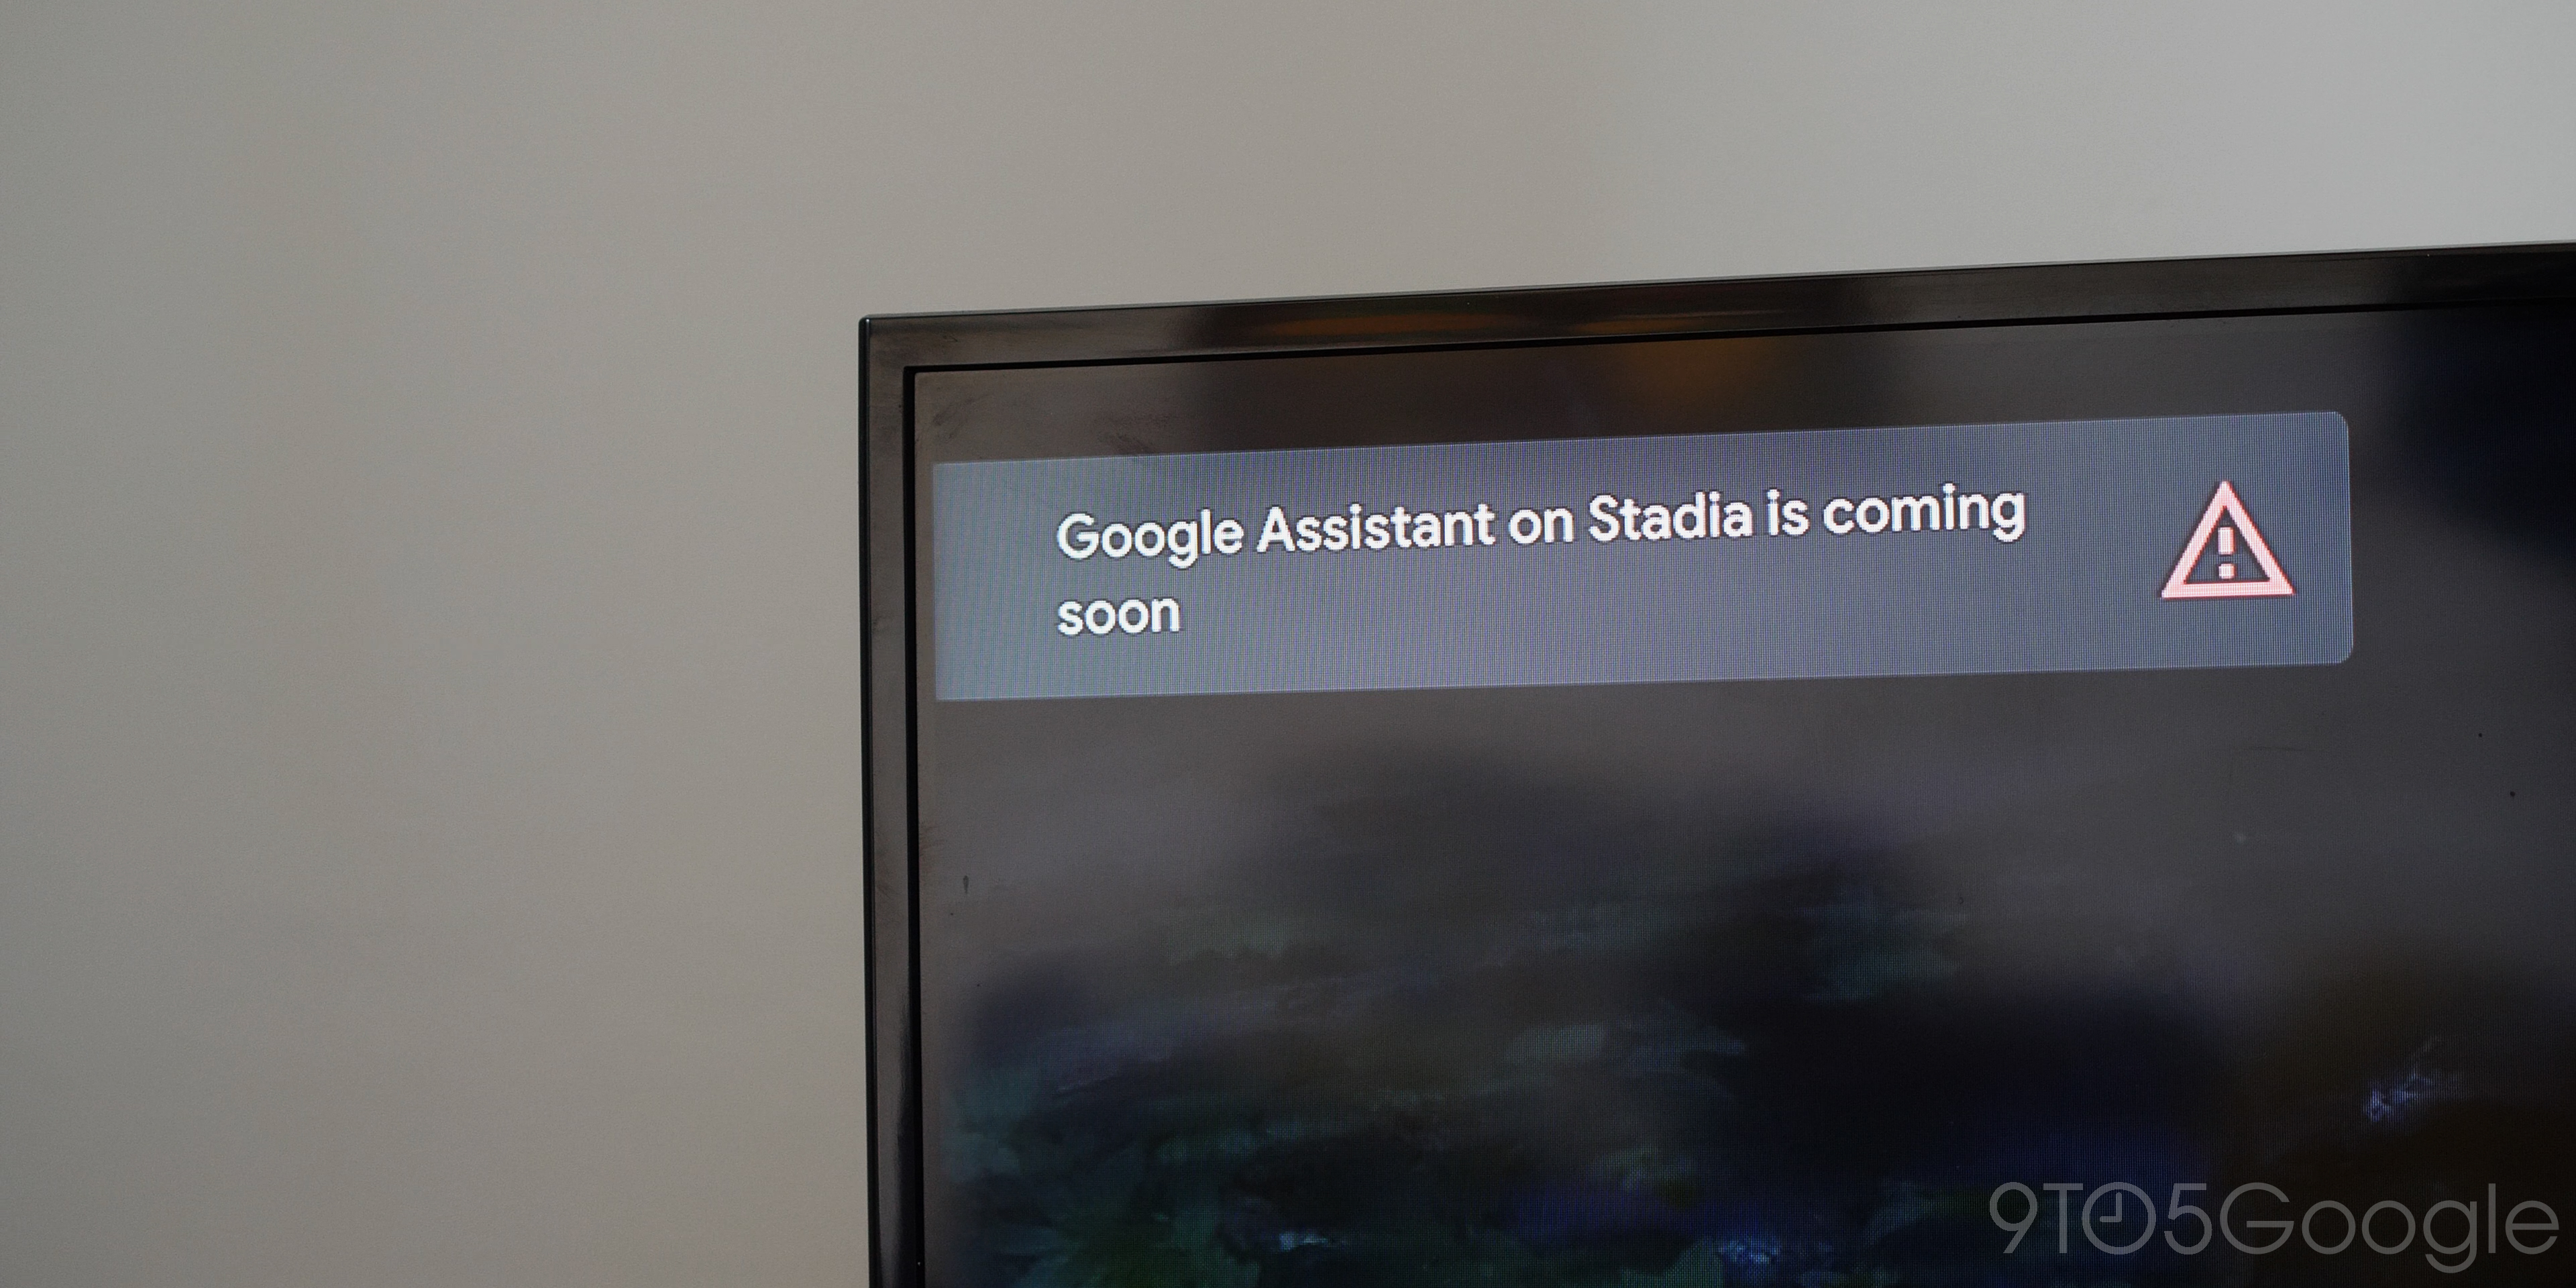 Google Stadia Review: Google's Game Service Isn't Ready for Primetime